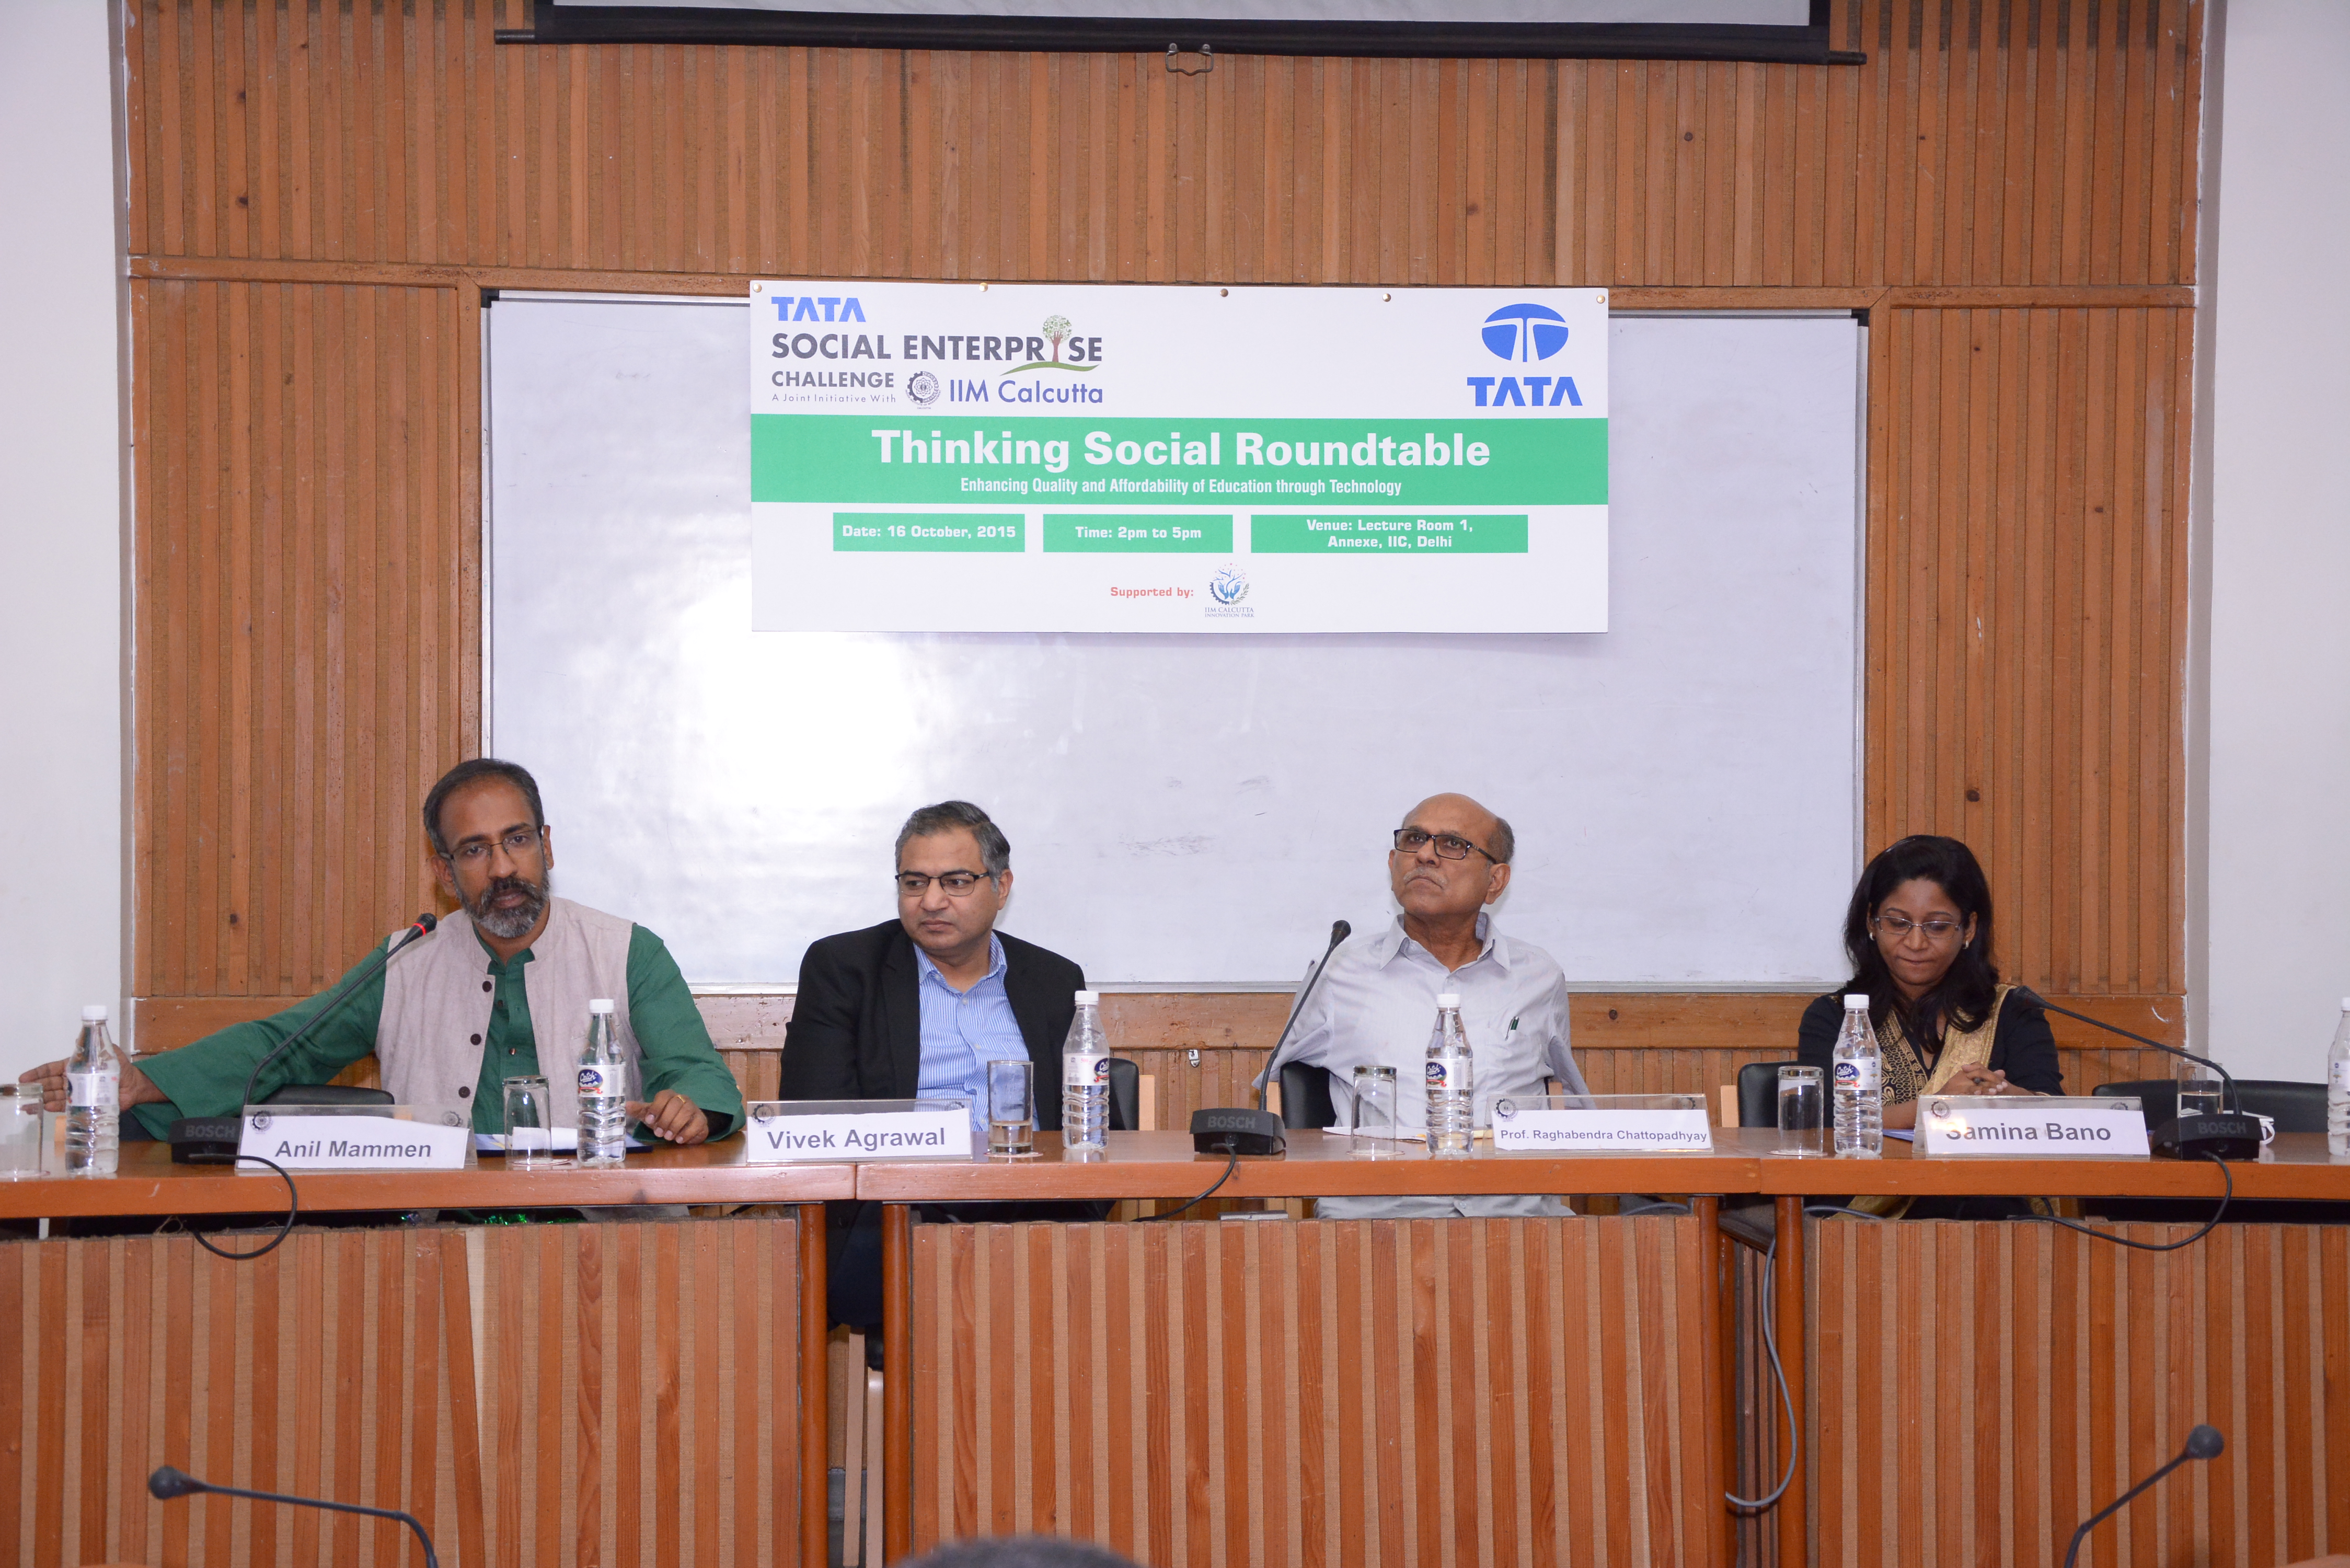 Roundtable on “Thinking Social” – 16 October 2015 at Delhi